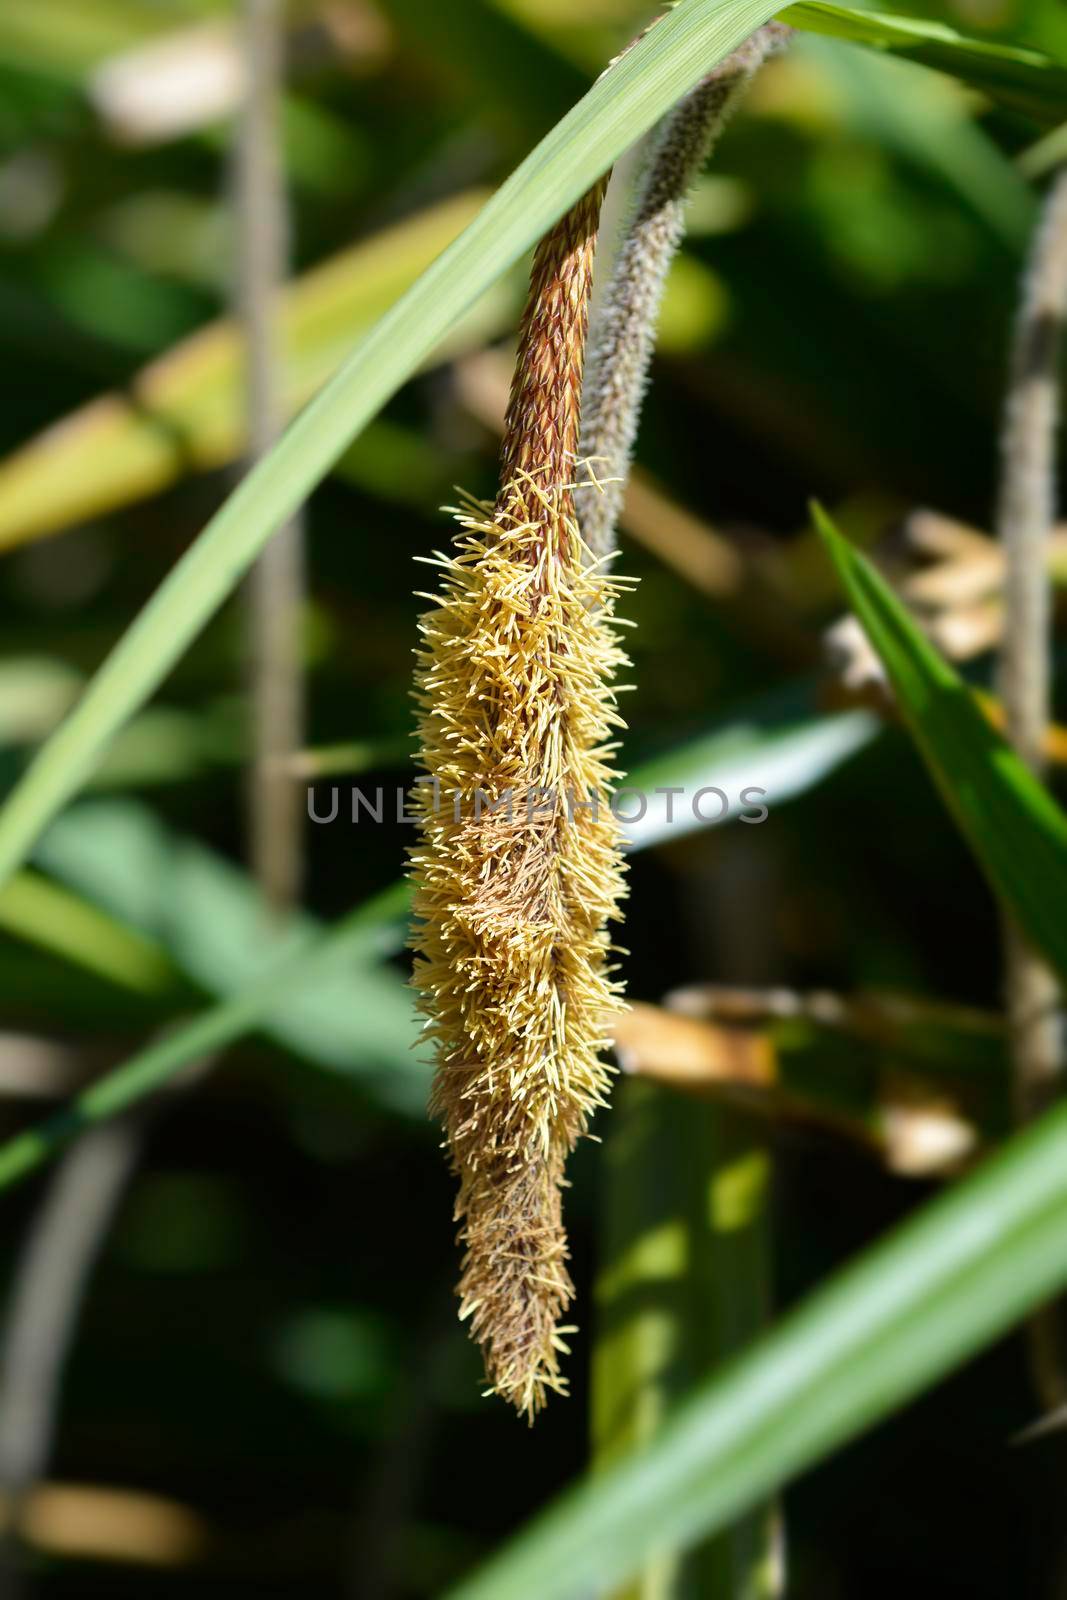 Pendulous Sedge flower - Latin name - Carex pendula